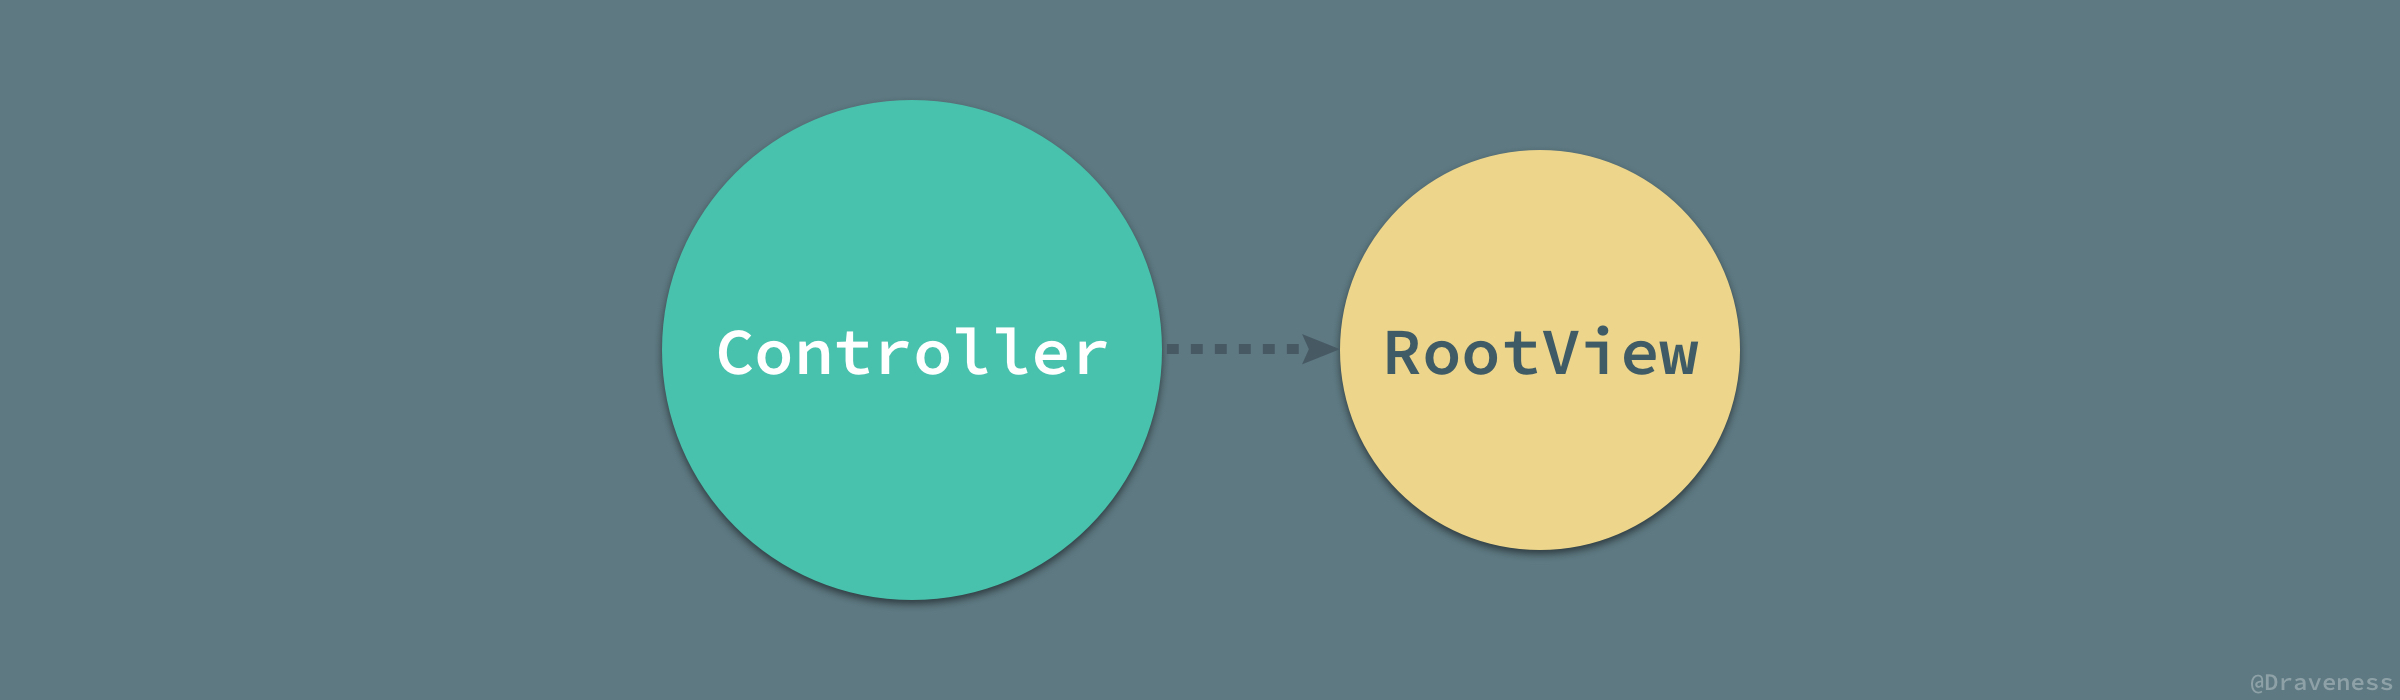 Controller-RootView.jpg